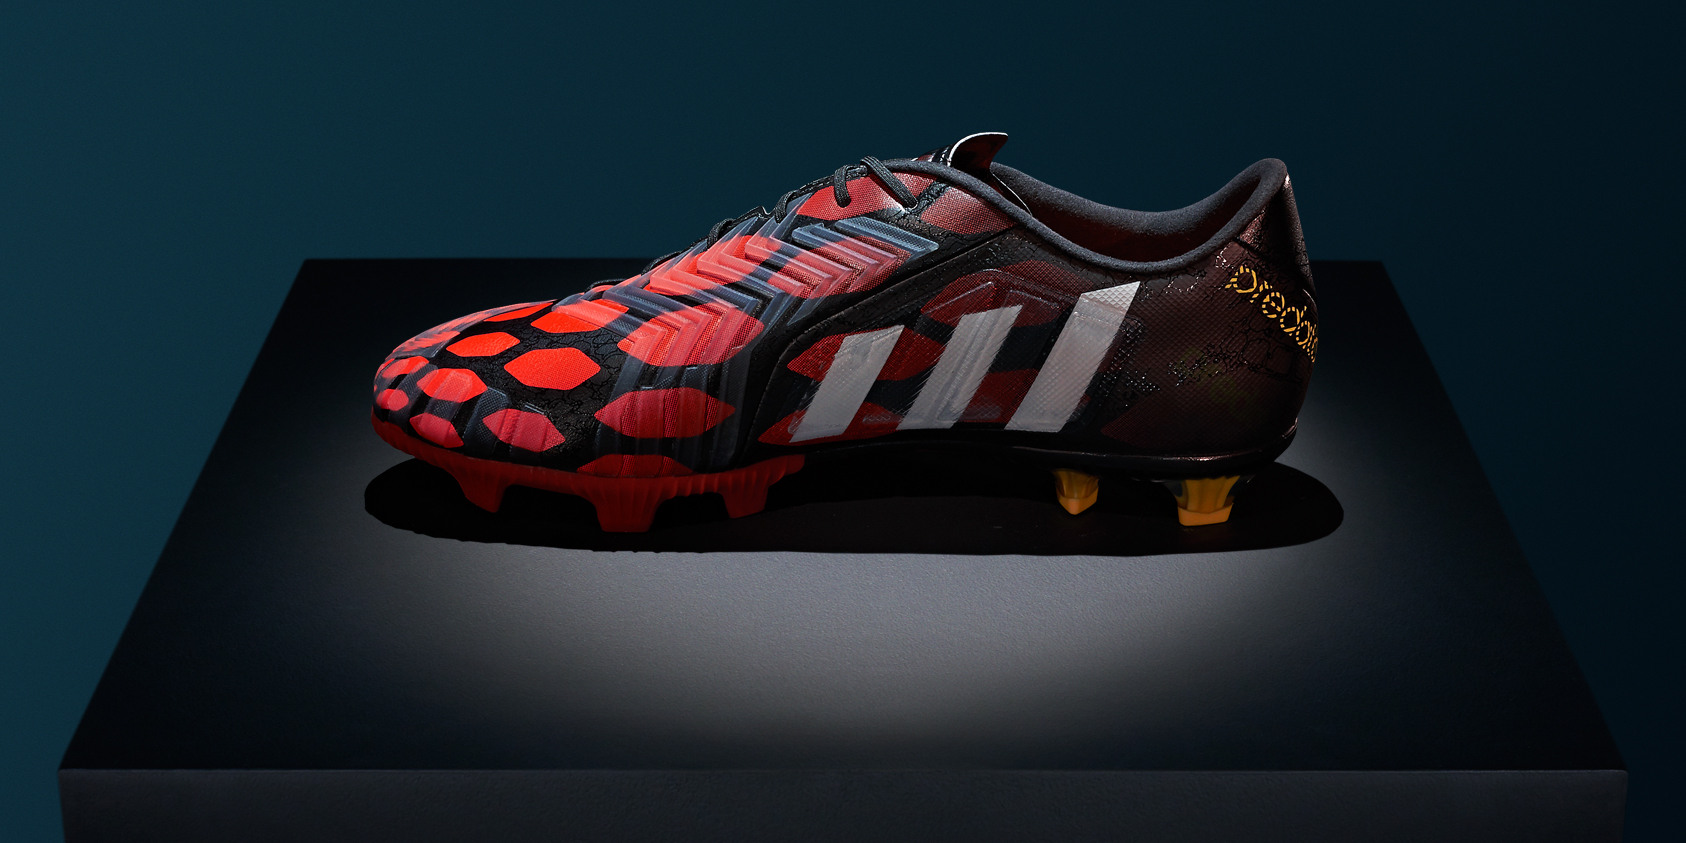 Adidas_Football_Predator_Instinct_Plinth_Social_2x1_06